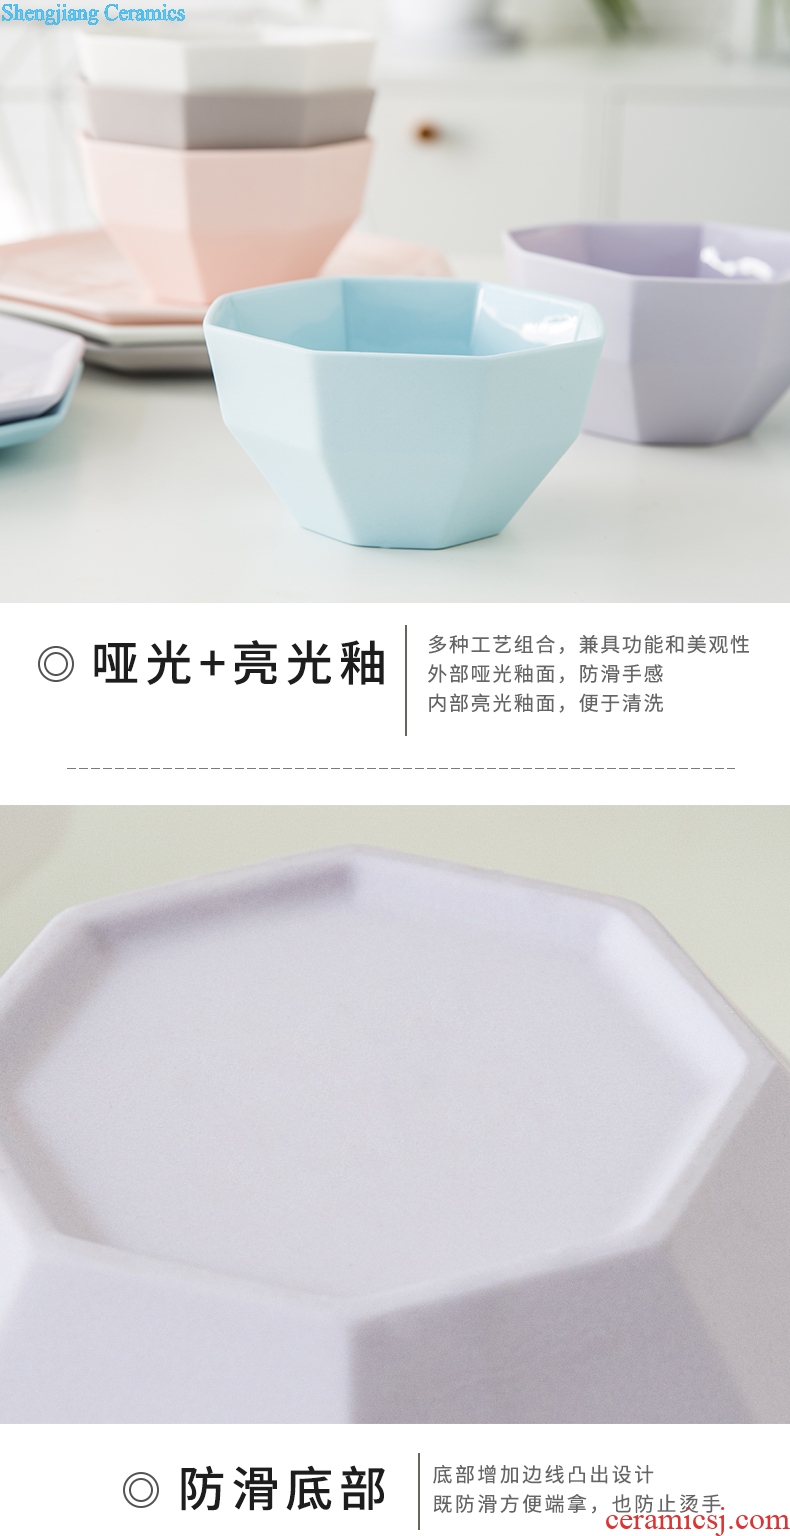 Million jia creative dessert home against hot Japanese Korean eat bowl anise light rainbow noodle bowl salad bowl